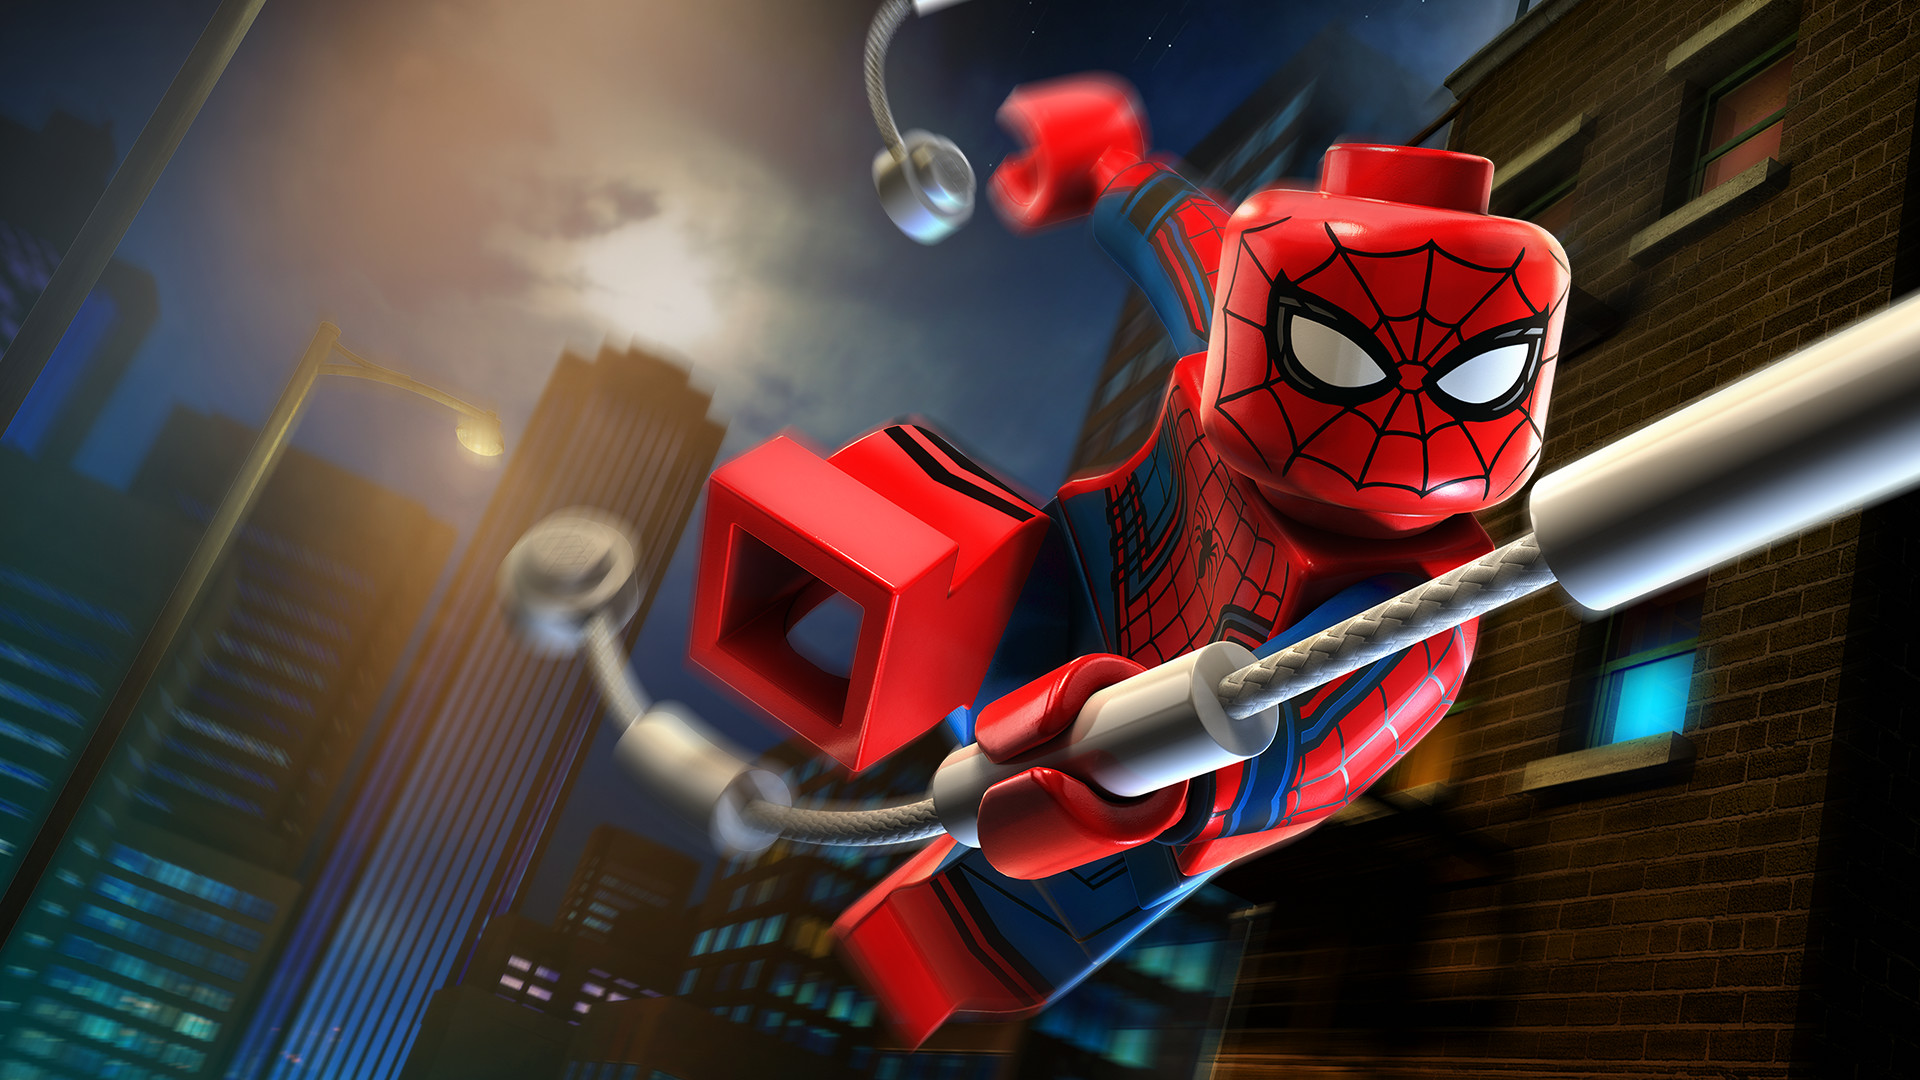 lego marvel avengers pc spider-man dlc only